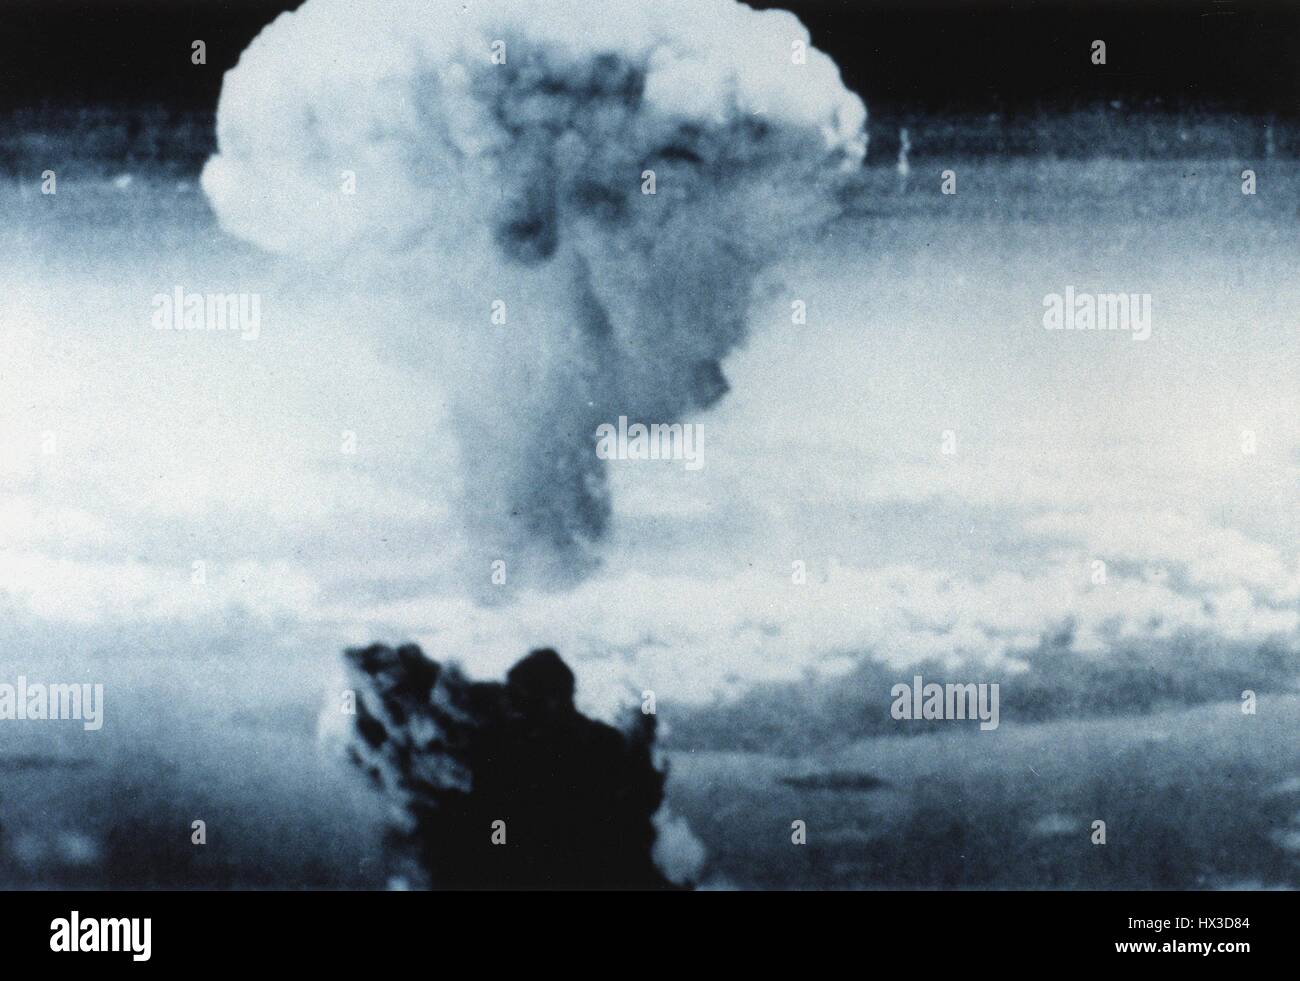 Atomic bombing of Japan at Nagasaki, August 9, 1945. Image courtesy US Department of Energy. Stock Photo